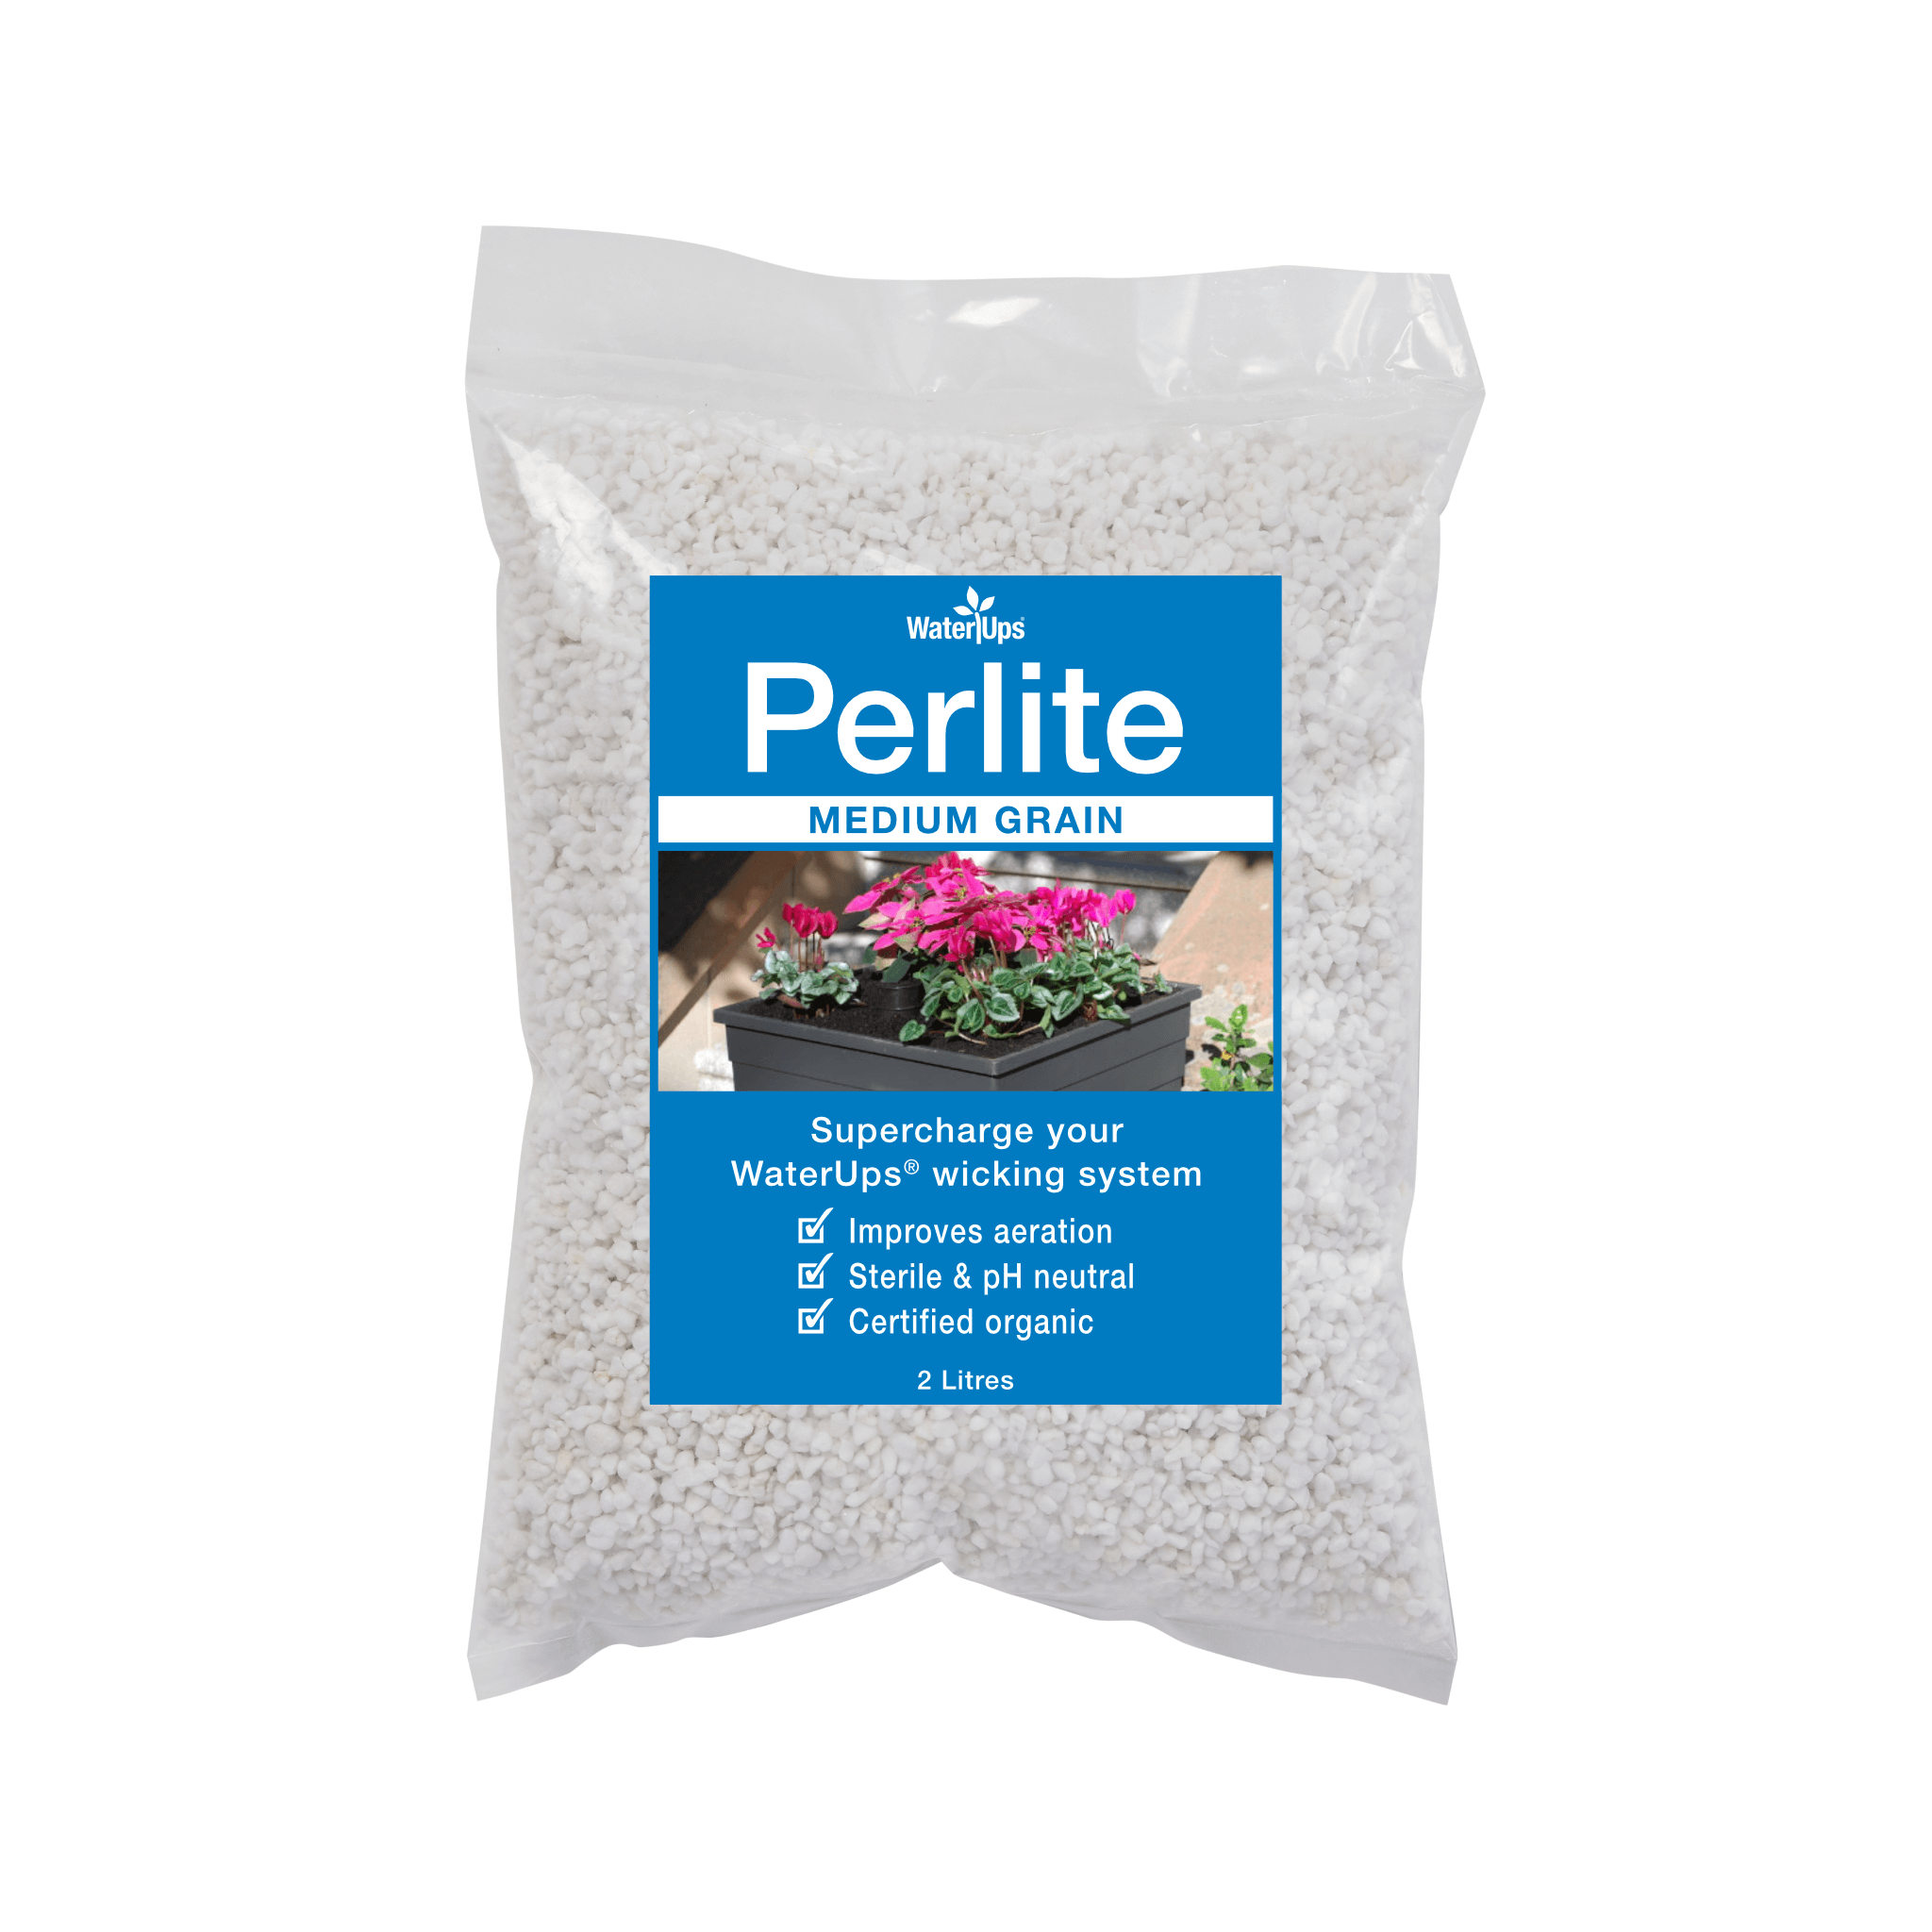 WaterUps Perlite 2 litre bag